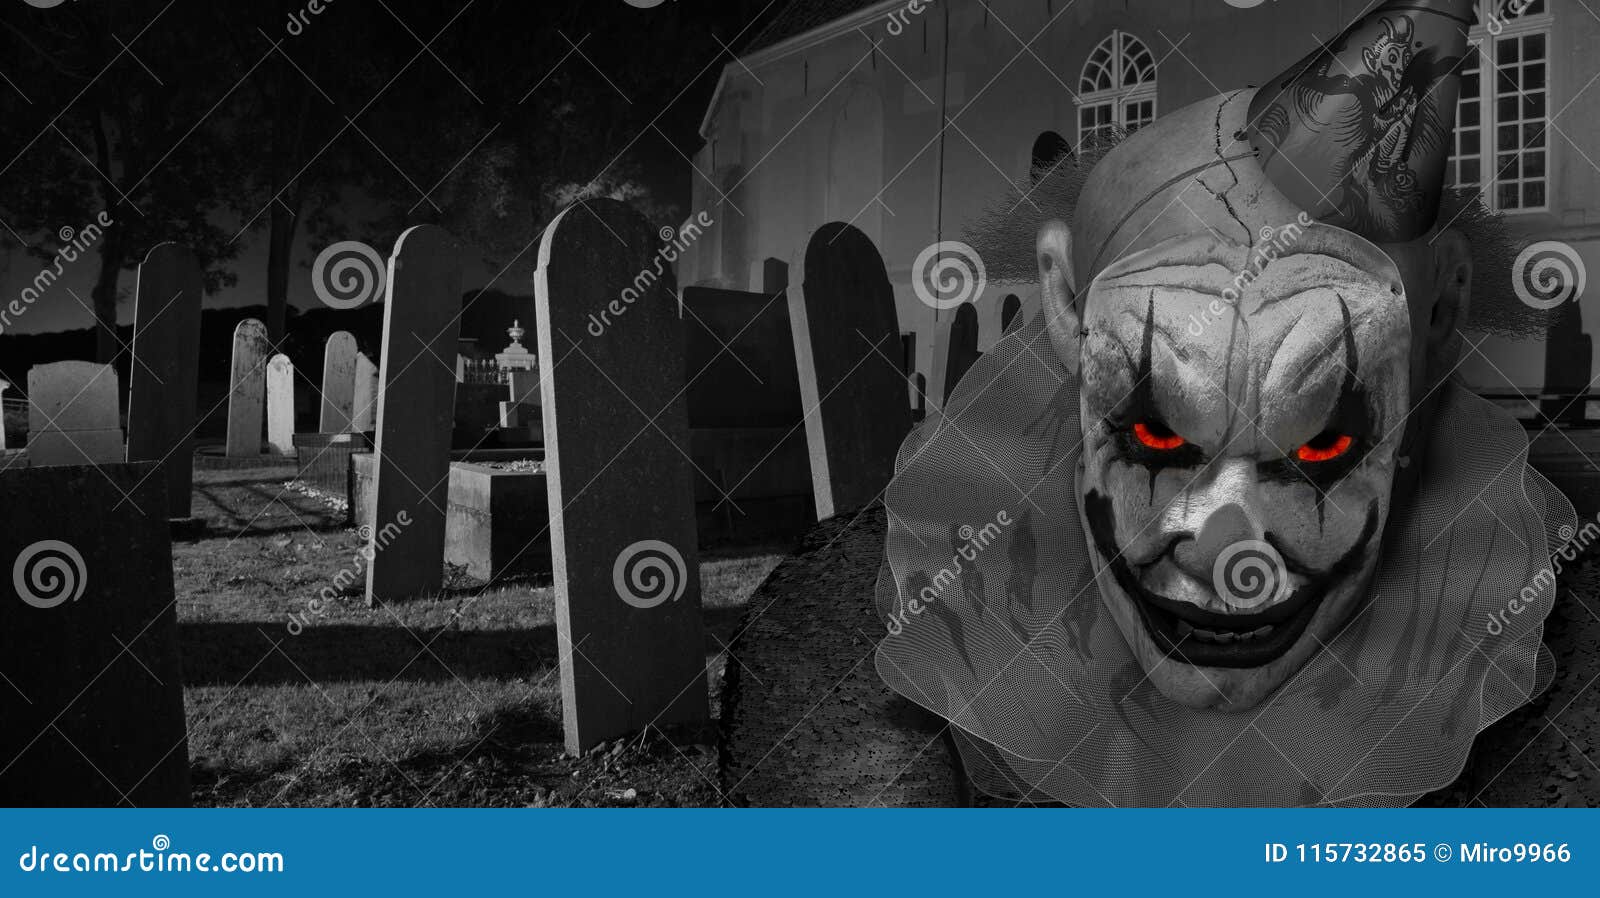 creepy horror clown in graveyard